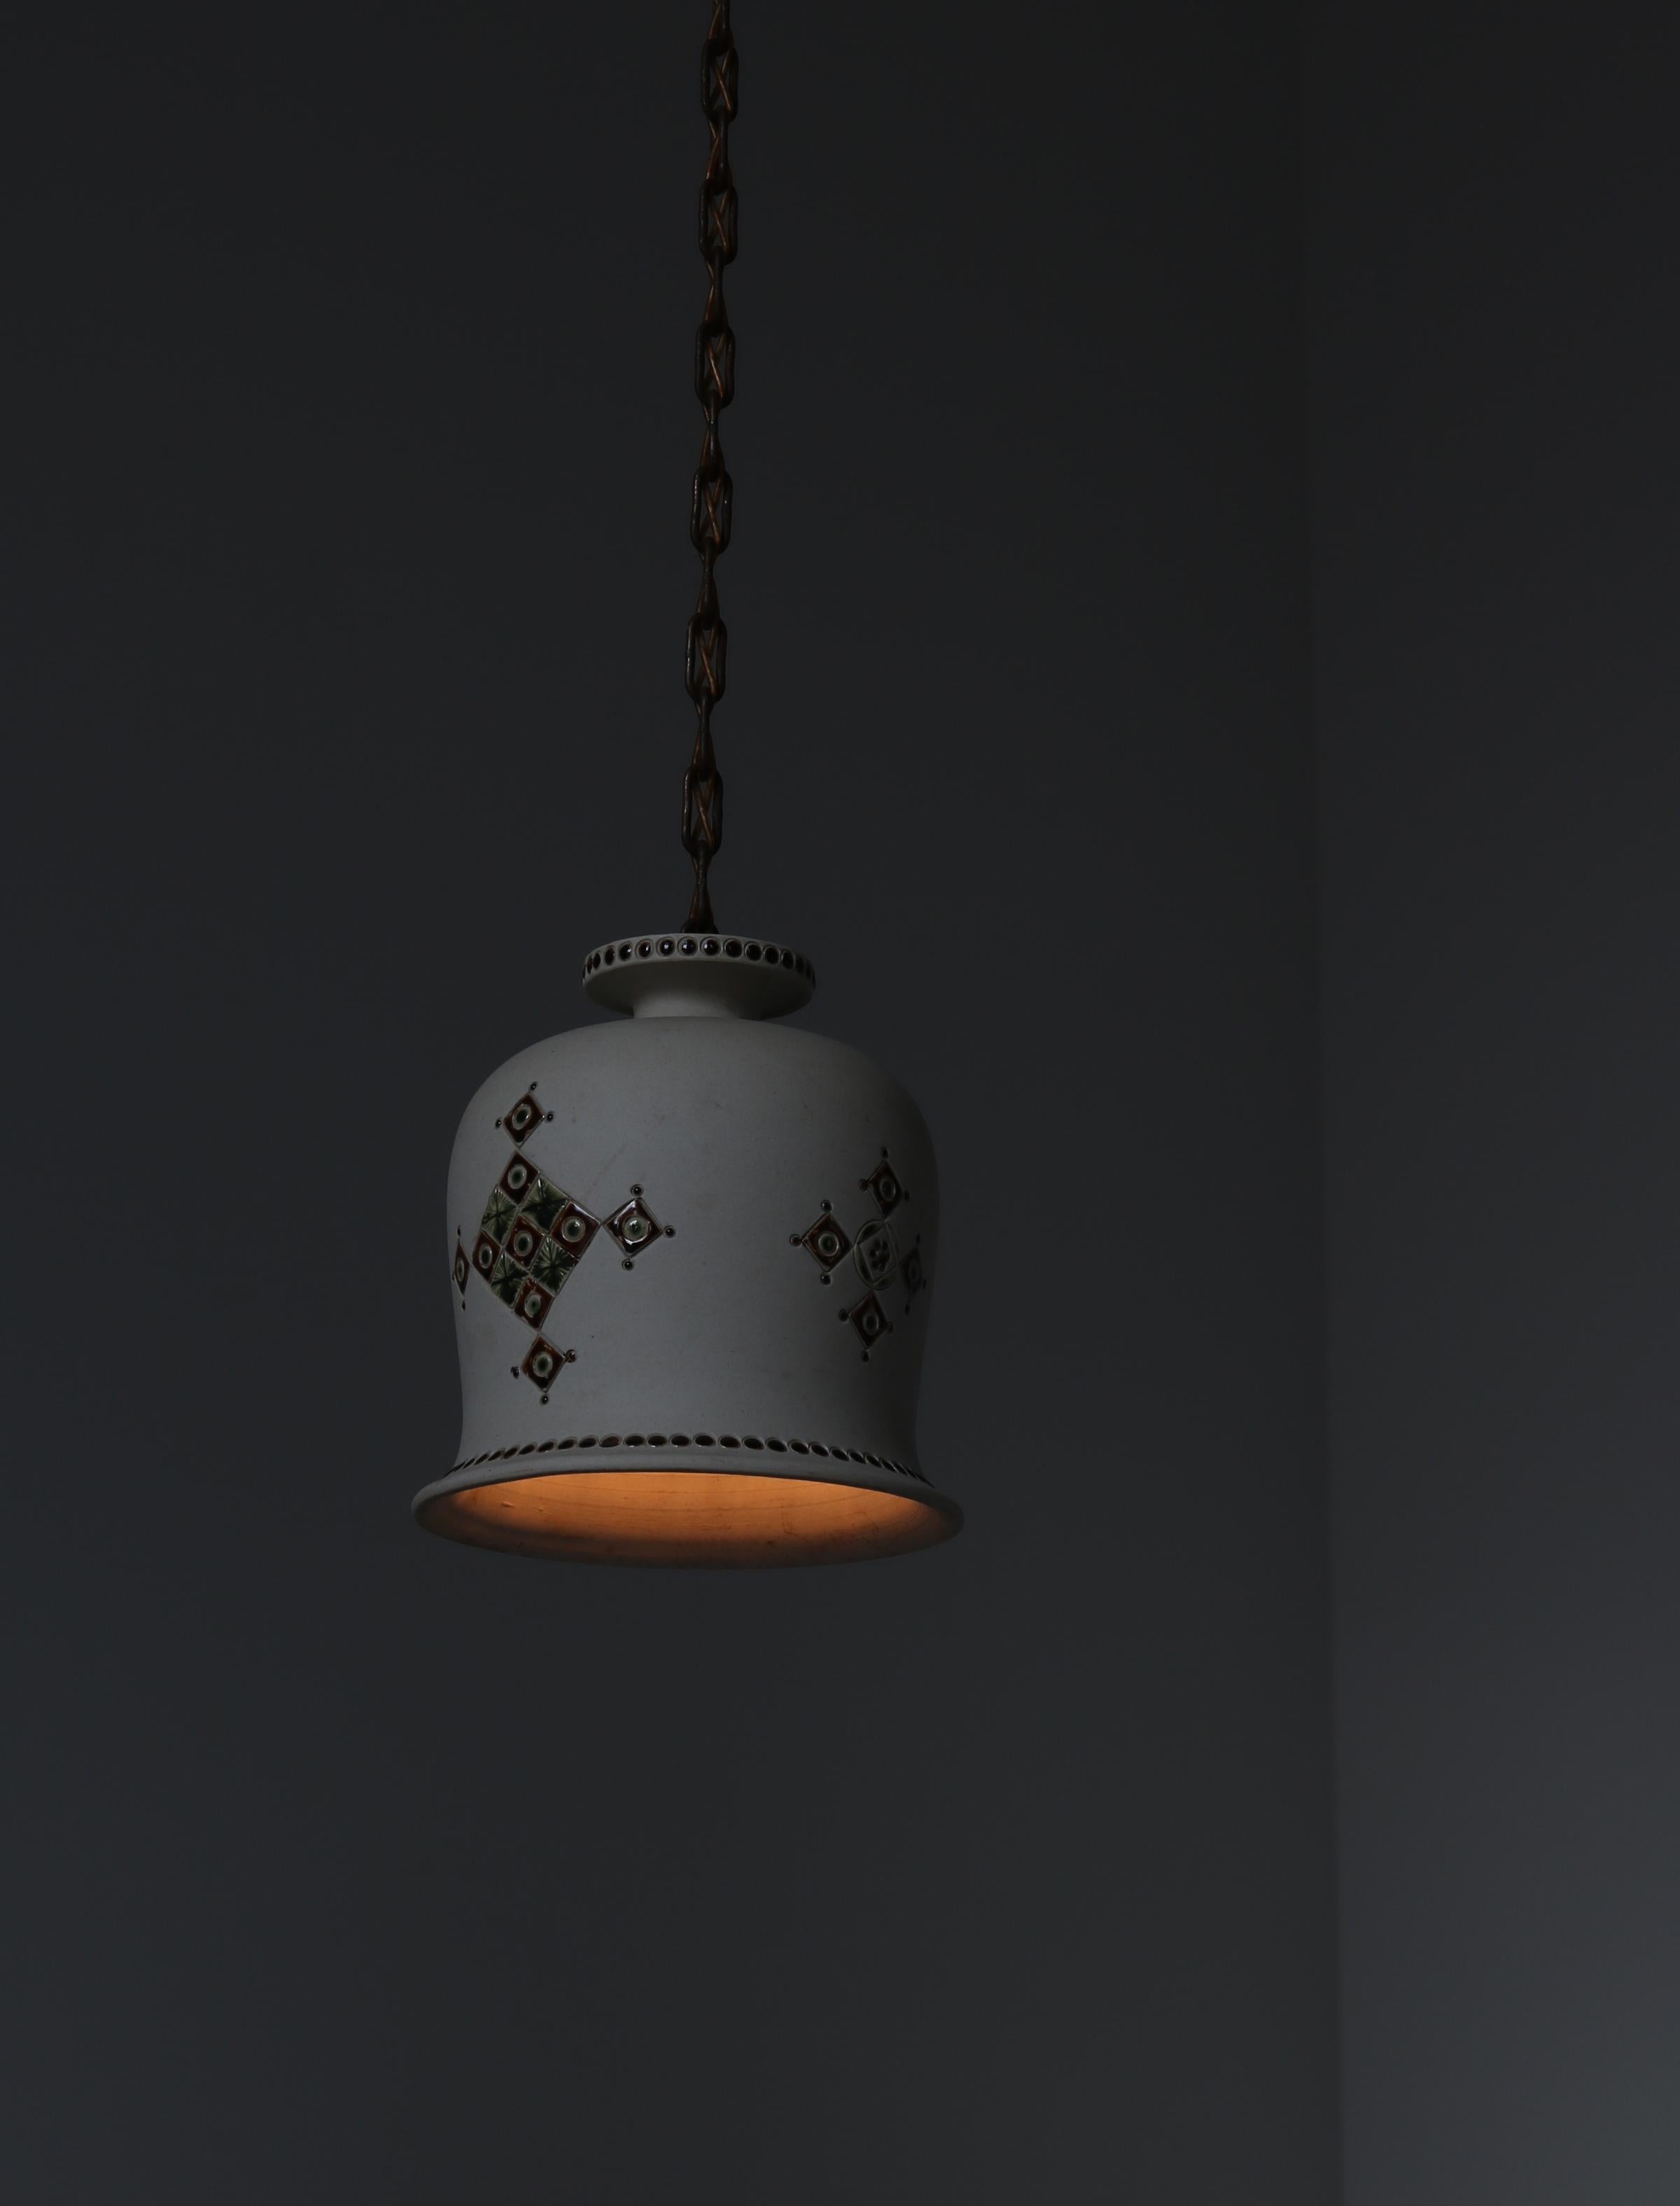 Charming and unique stoneware pendant lamp by Danish studio 